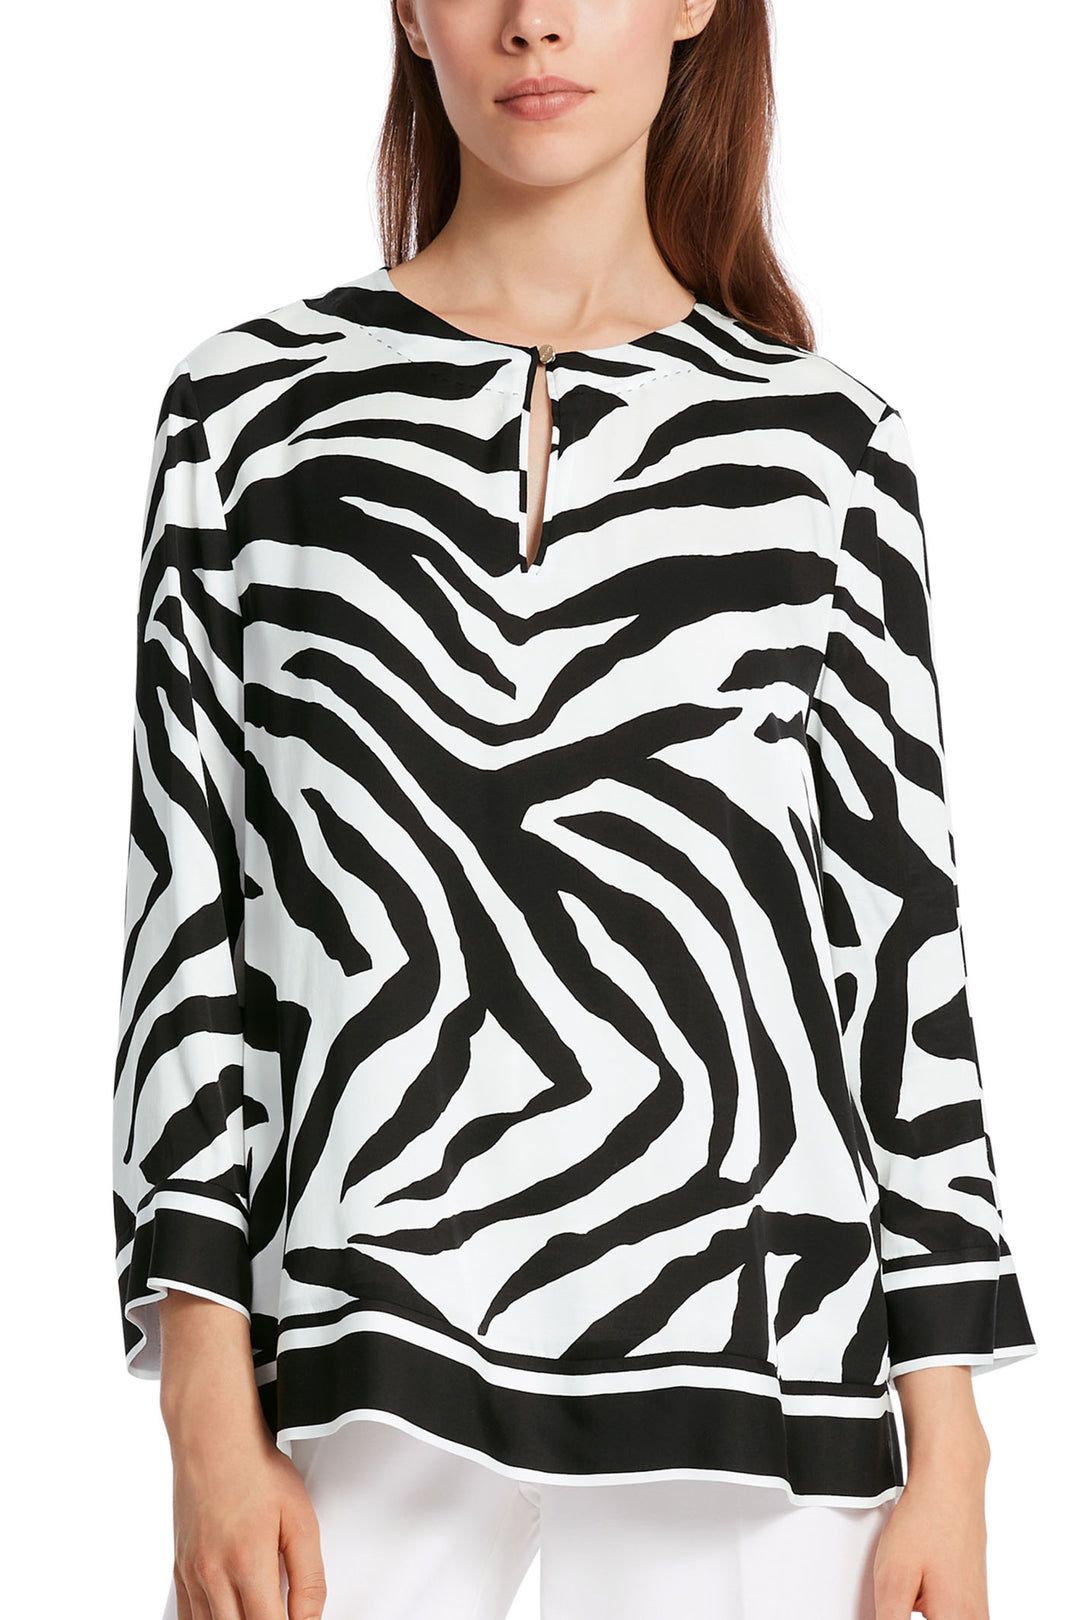 Marc Cain WC 51.28 W53 Black White Zebra Animal Print Top - Olivia Grace Fashion